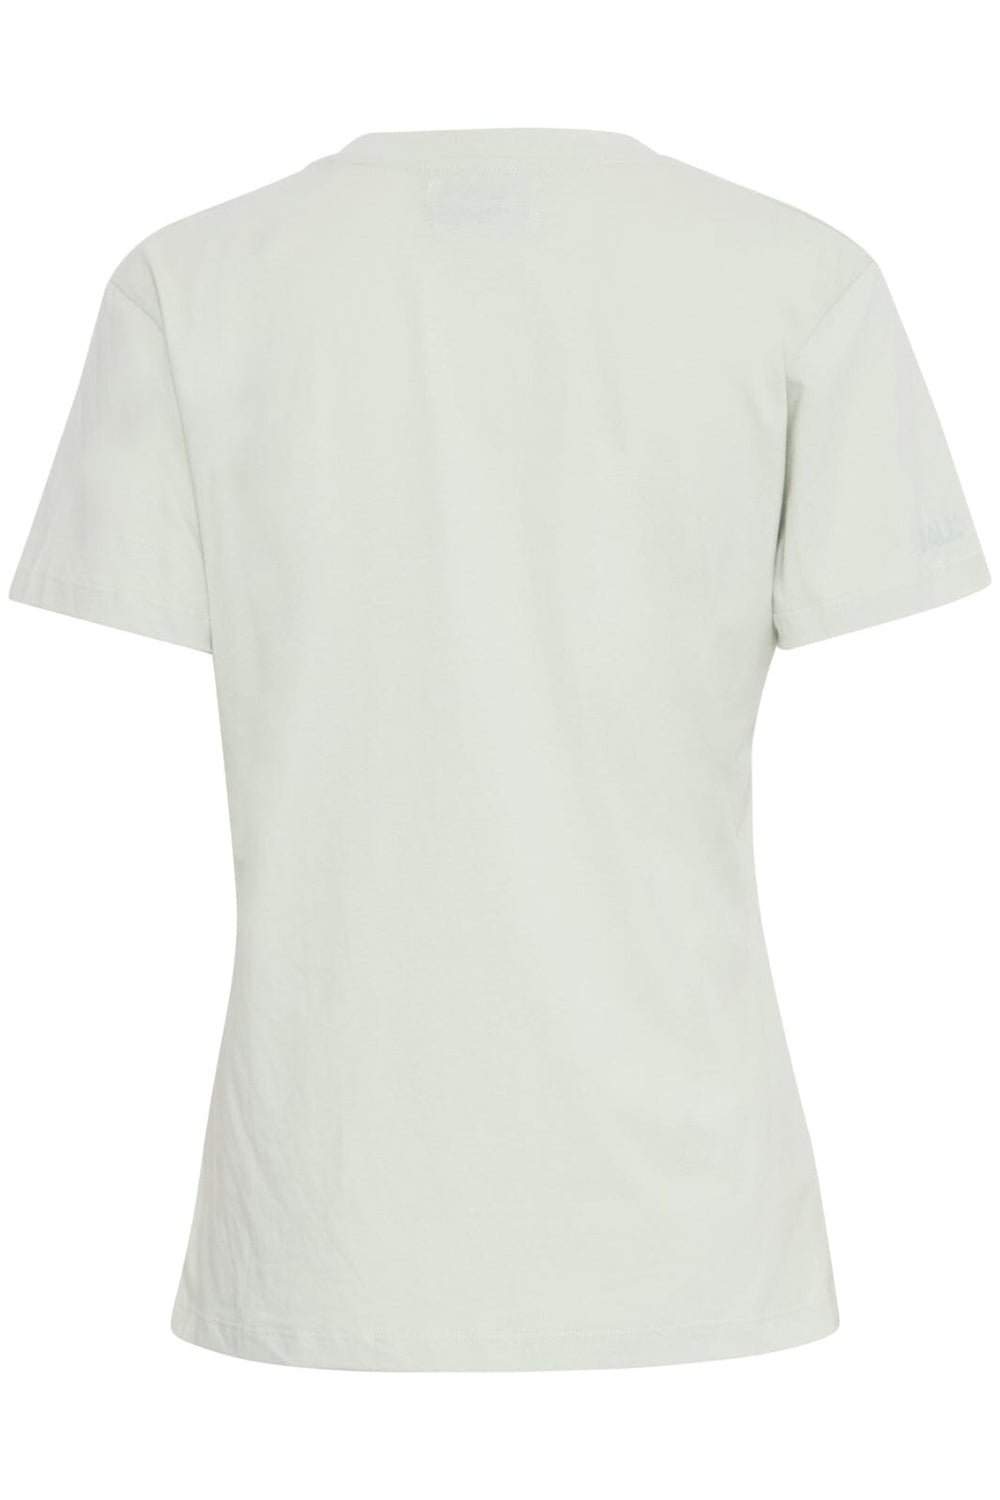 Forudbestilling - Ball - R. David Womens T-Shirt - 130116 Pastel Green T-shirts 